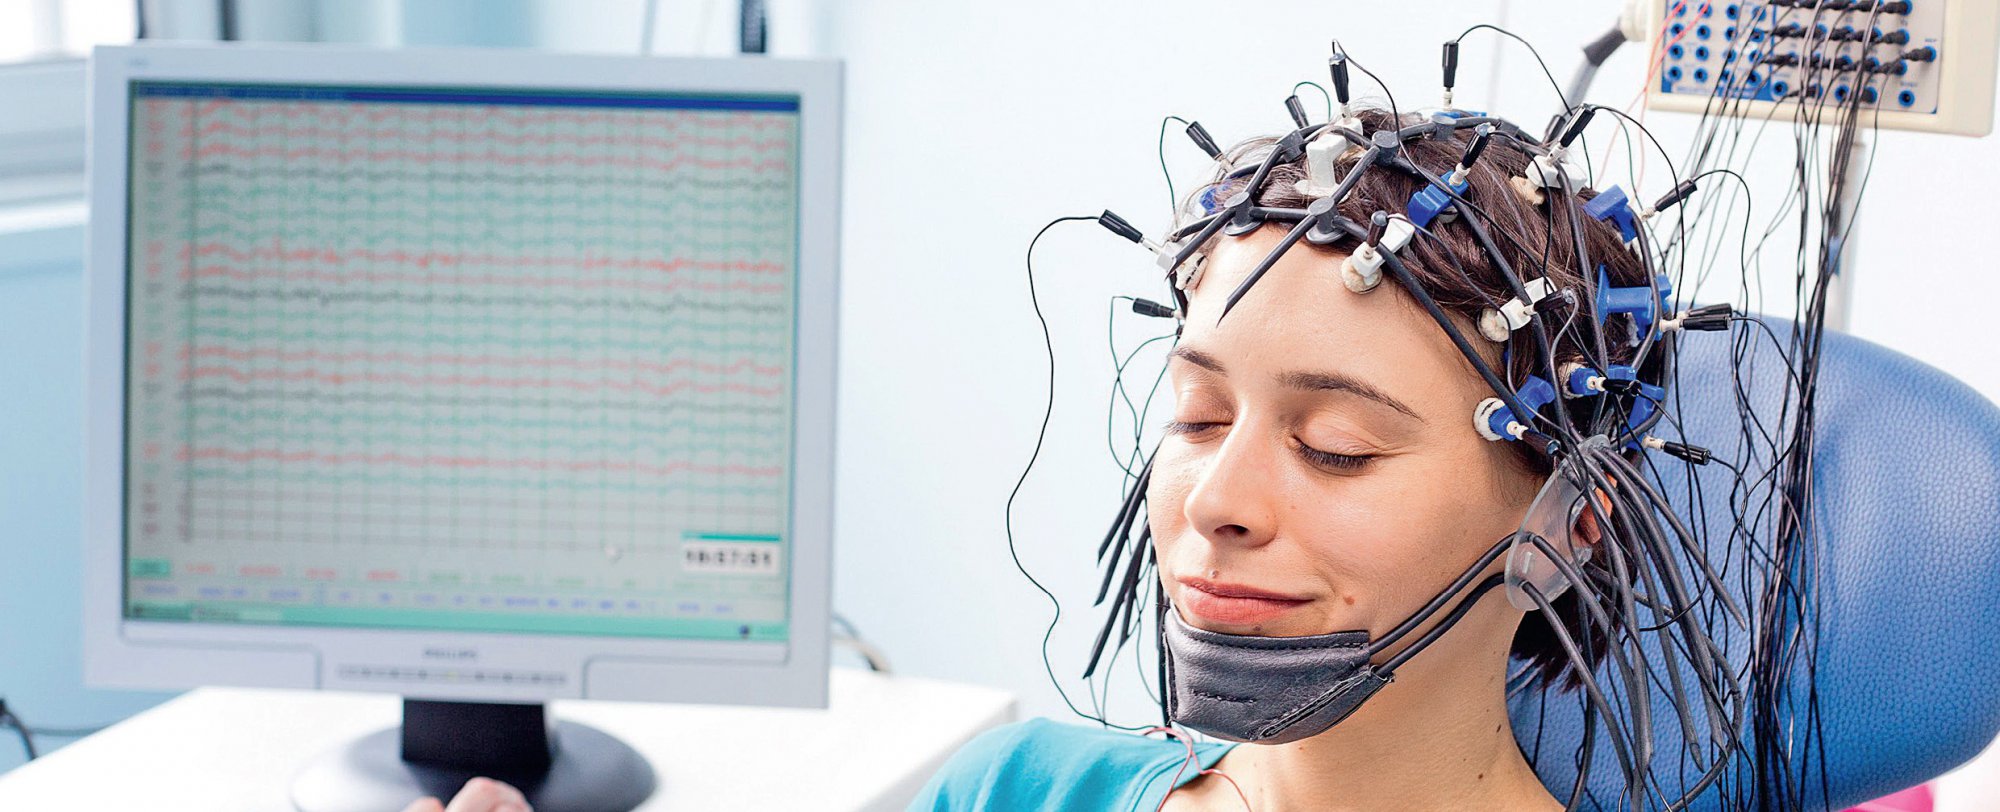 Ээг в в новгороде. Энцефалограмма головного мозга. РЭГ И ЭЭГ. Электроэнцефалография (ЭЭГ). Электроэнцефалография головного мозга (ЭЭГ).